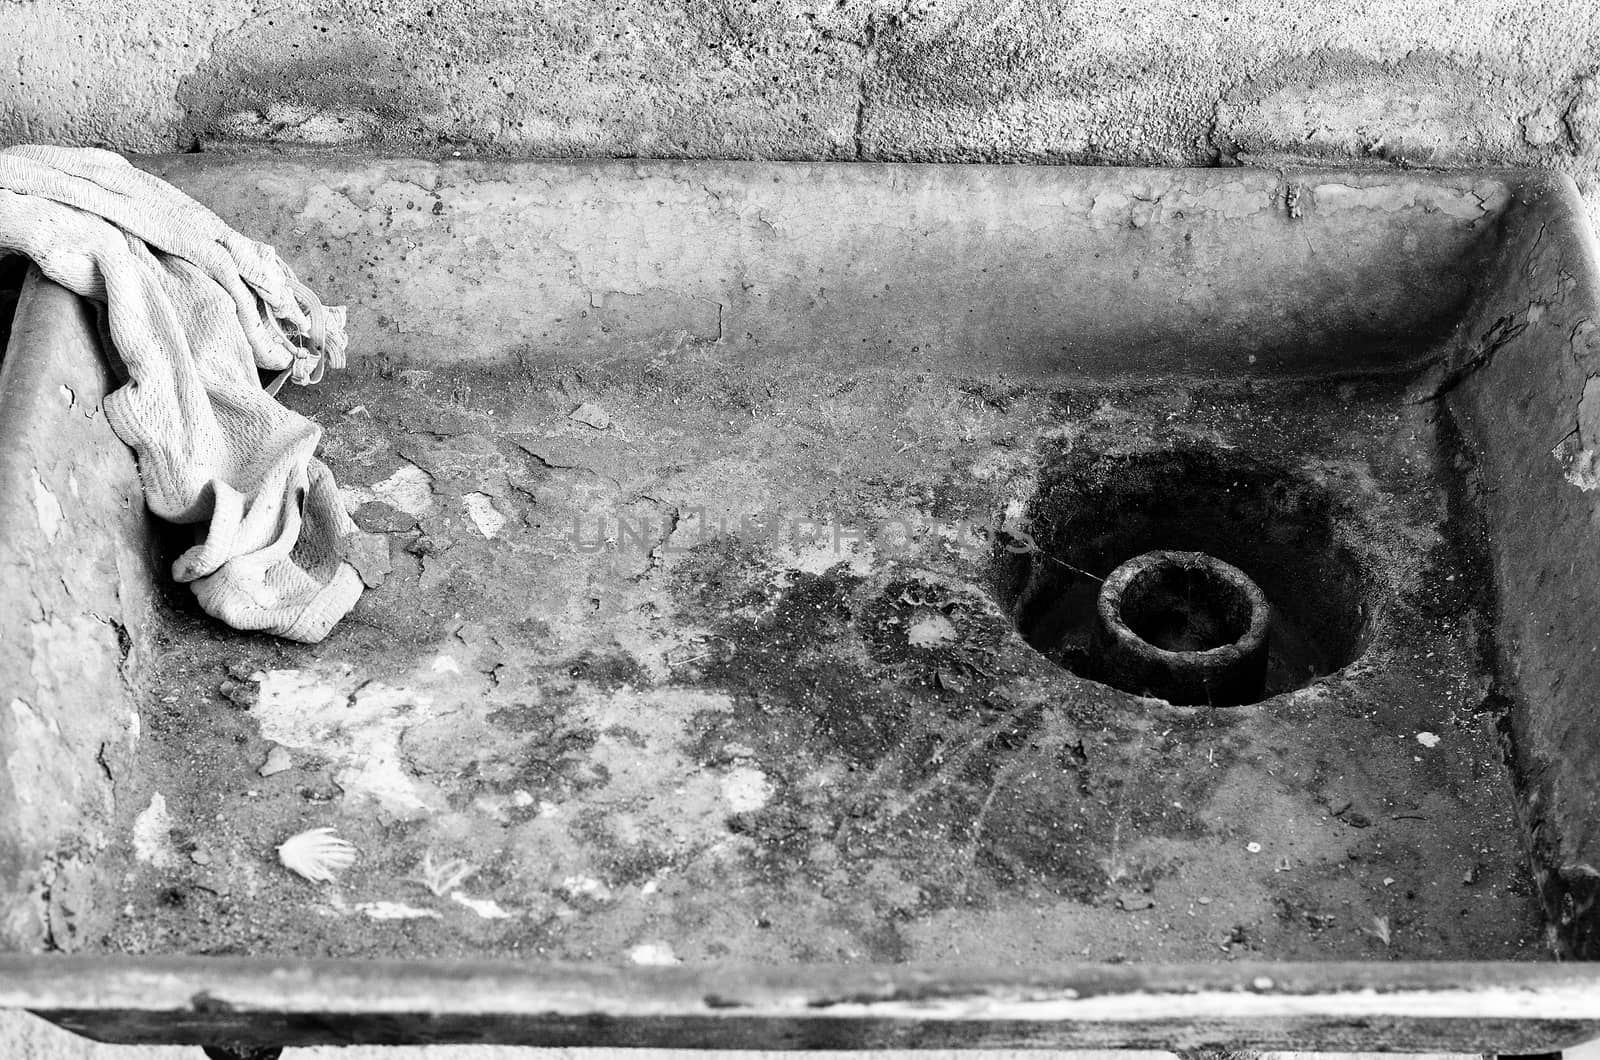 Old dirty metal rusty sink by eenevski